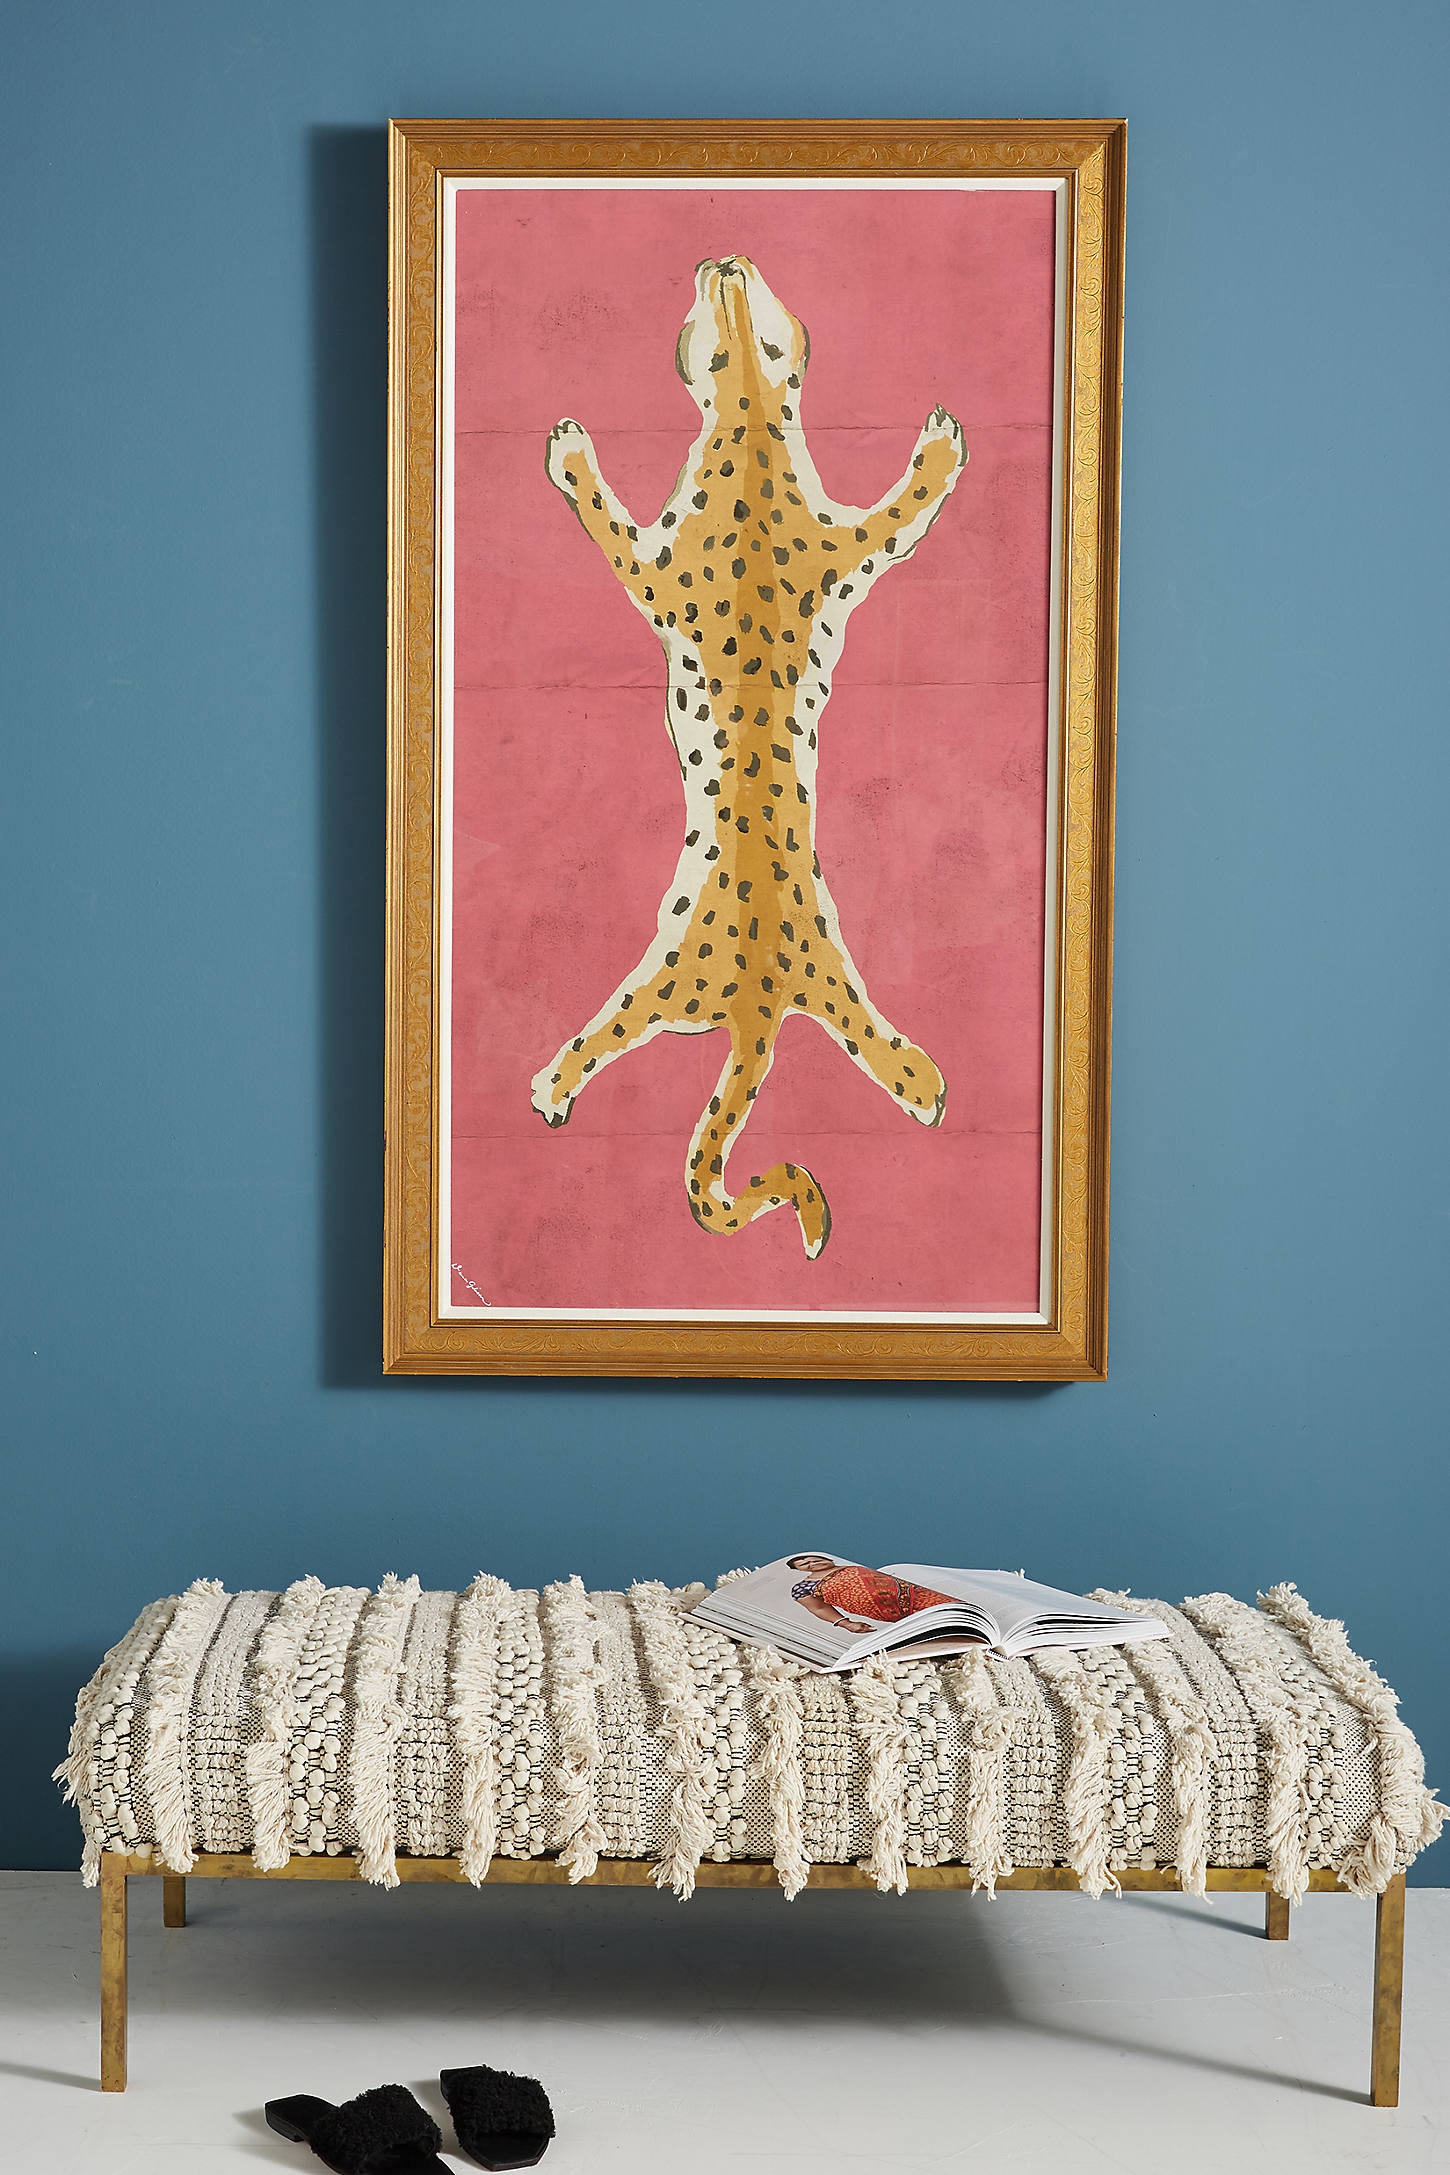 Leopard Series Wall Art - Image 0